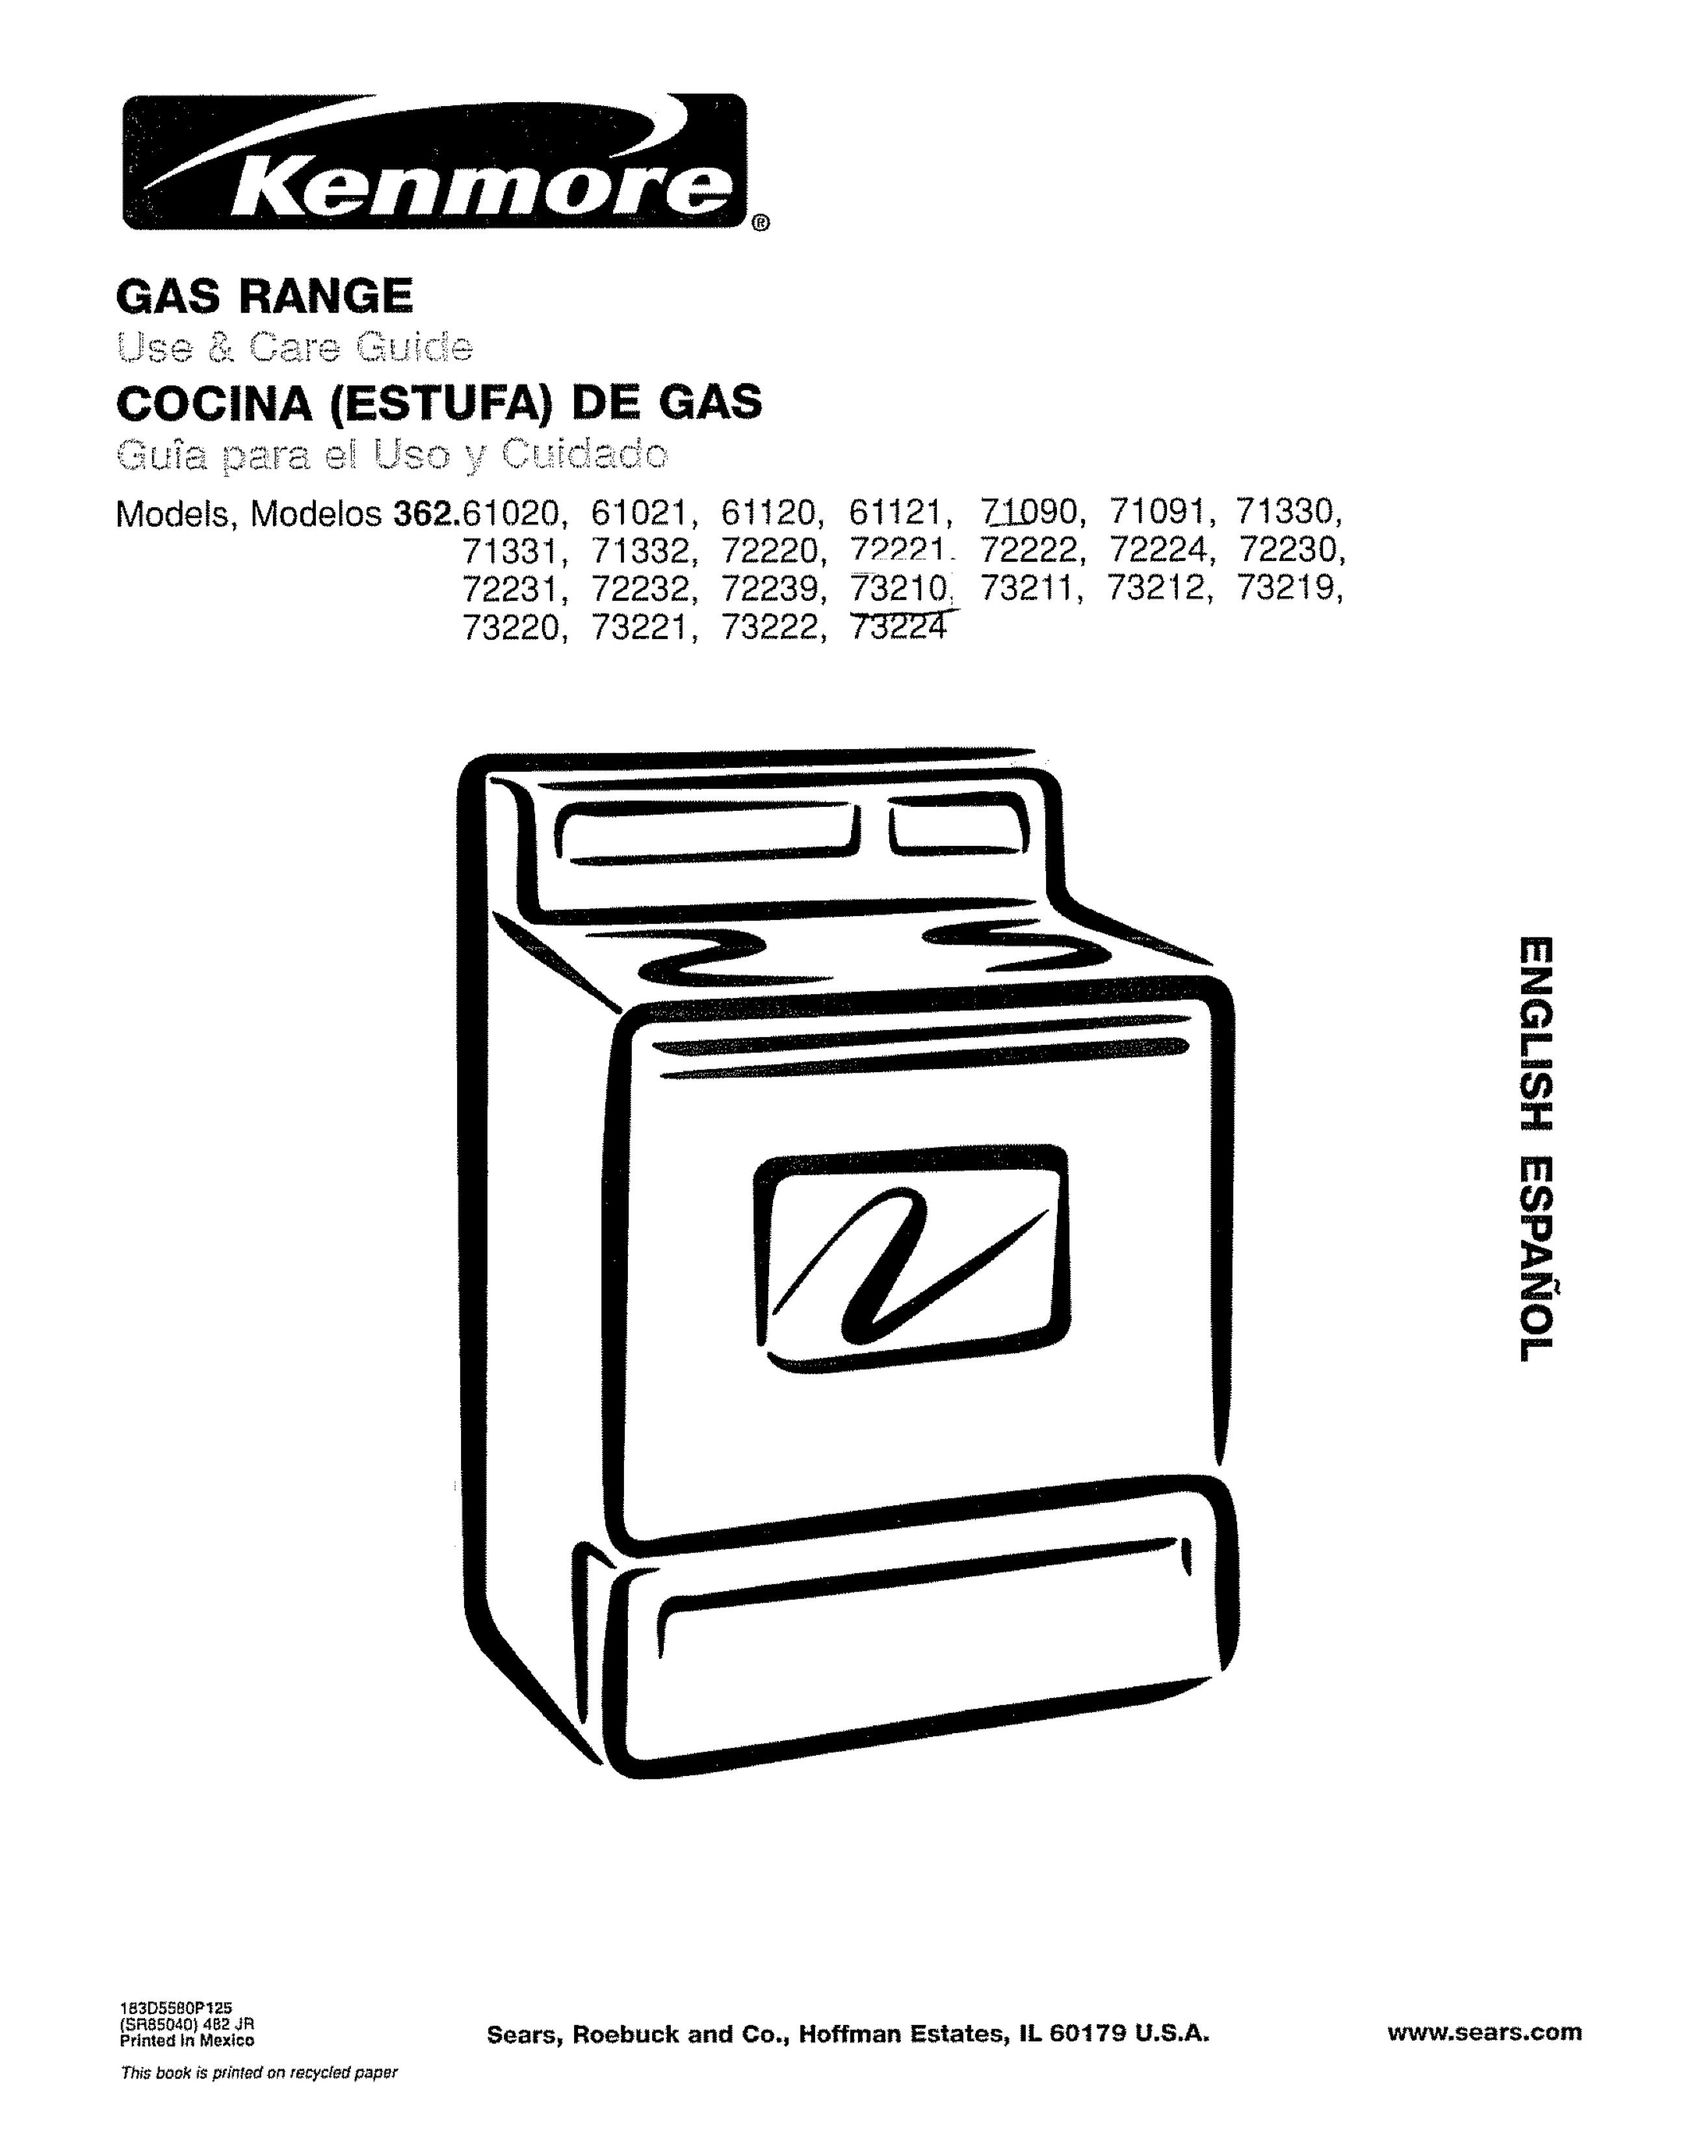 Kenmore 362.72239 Range User Manual